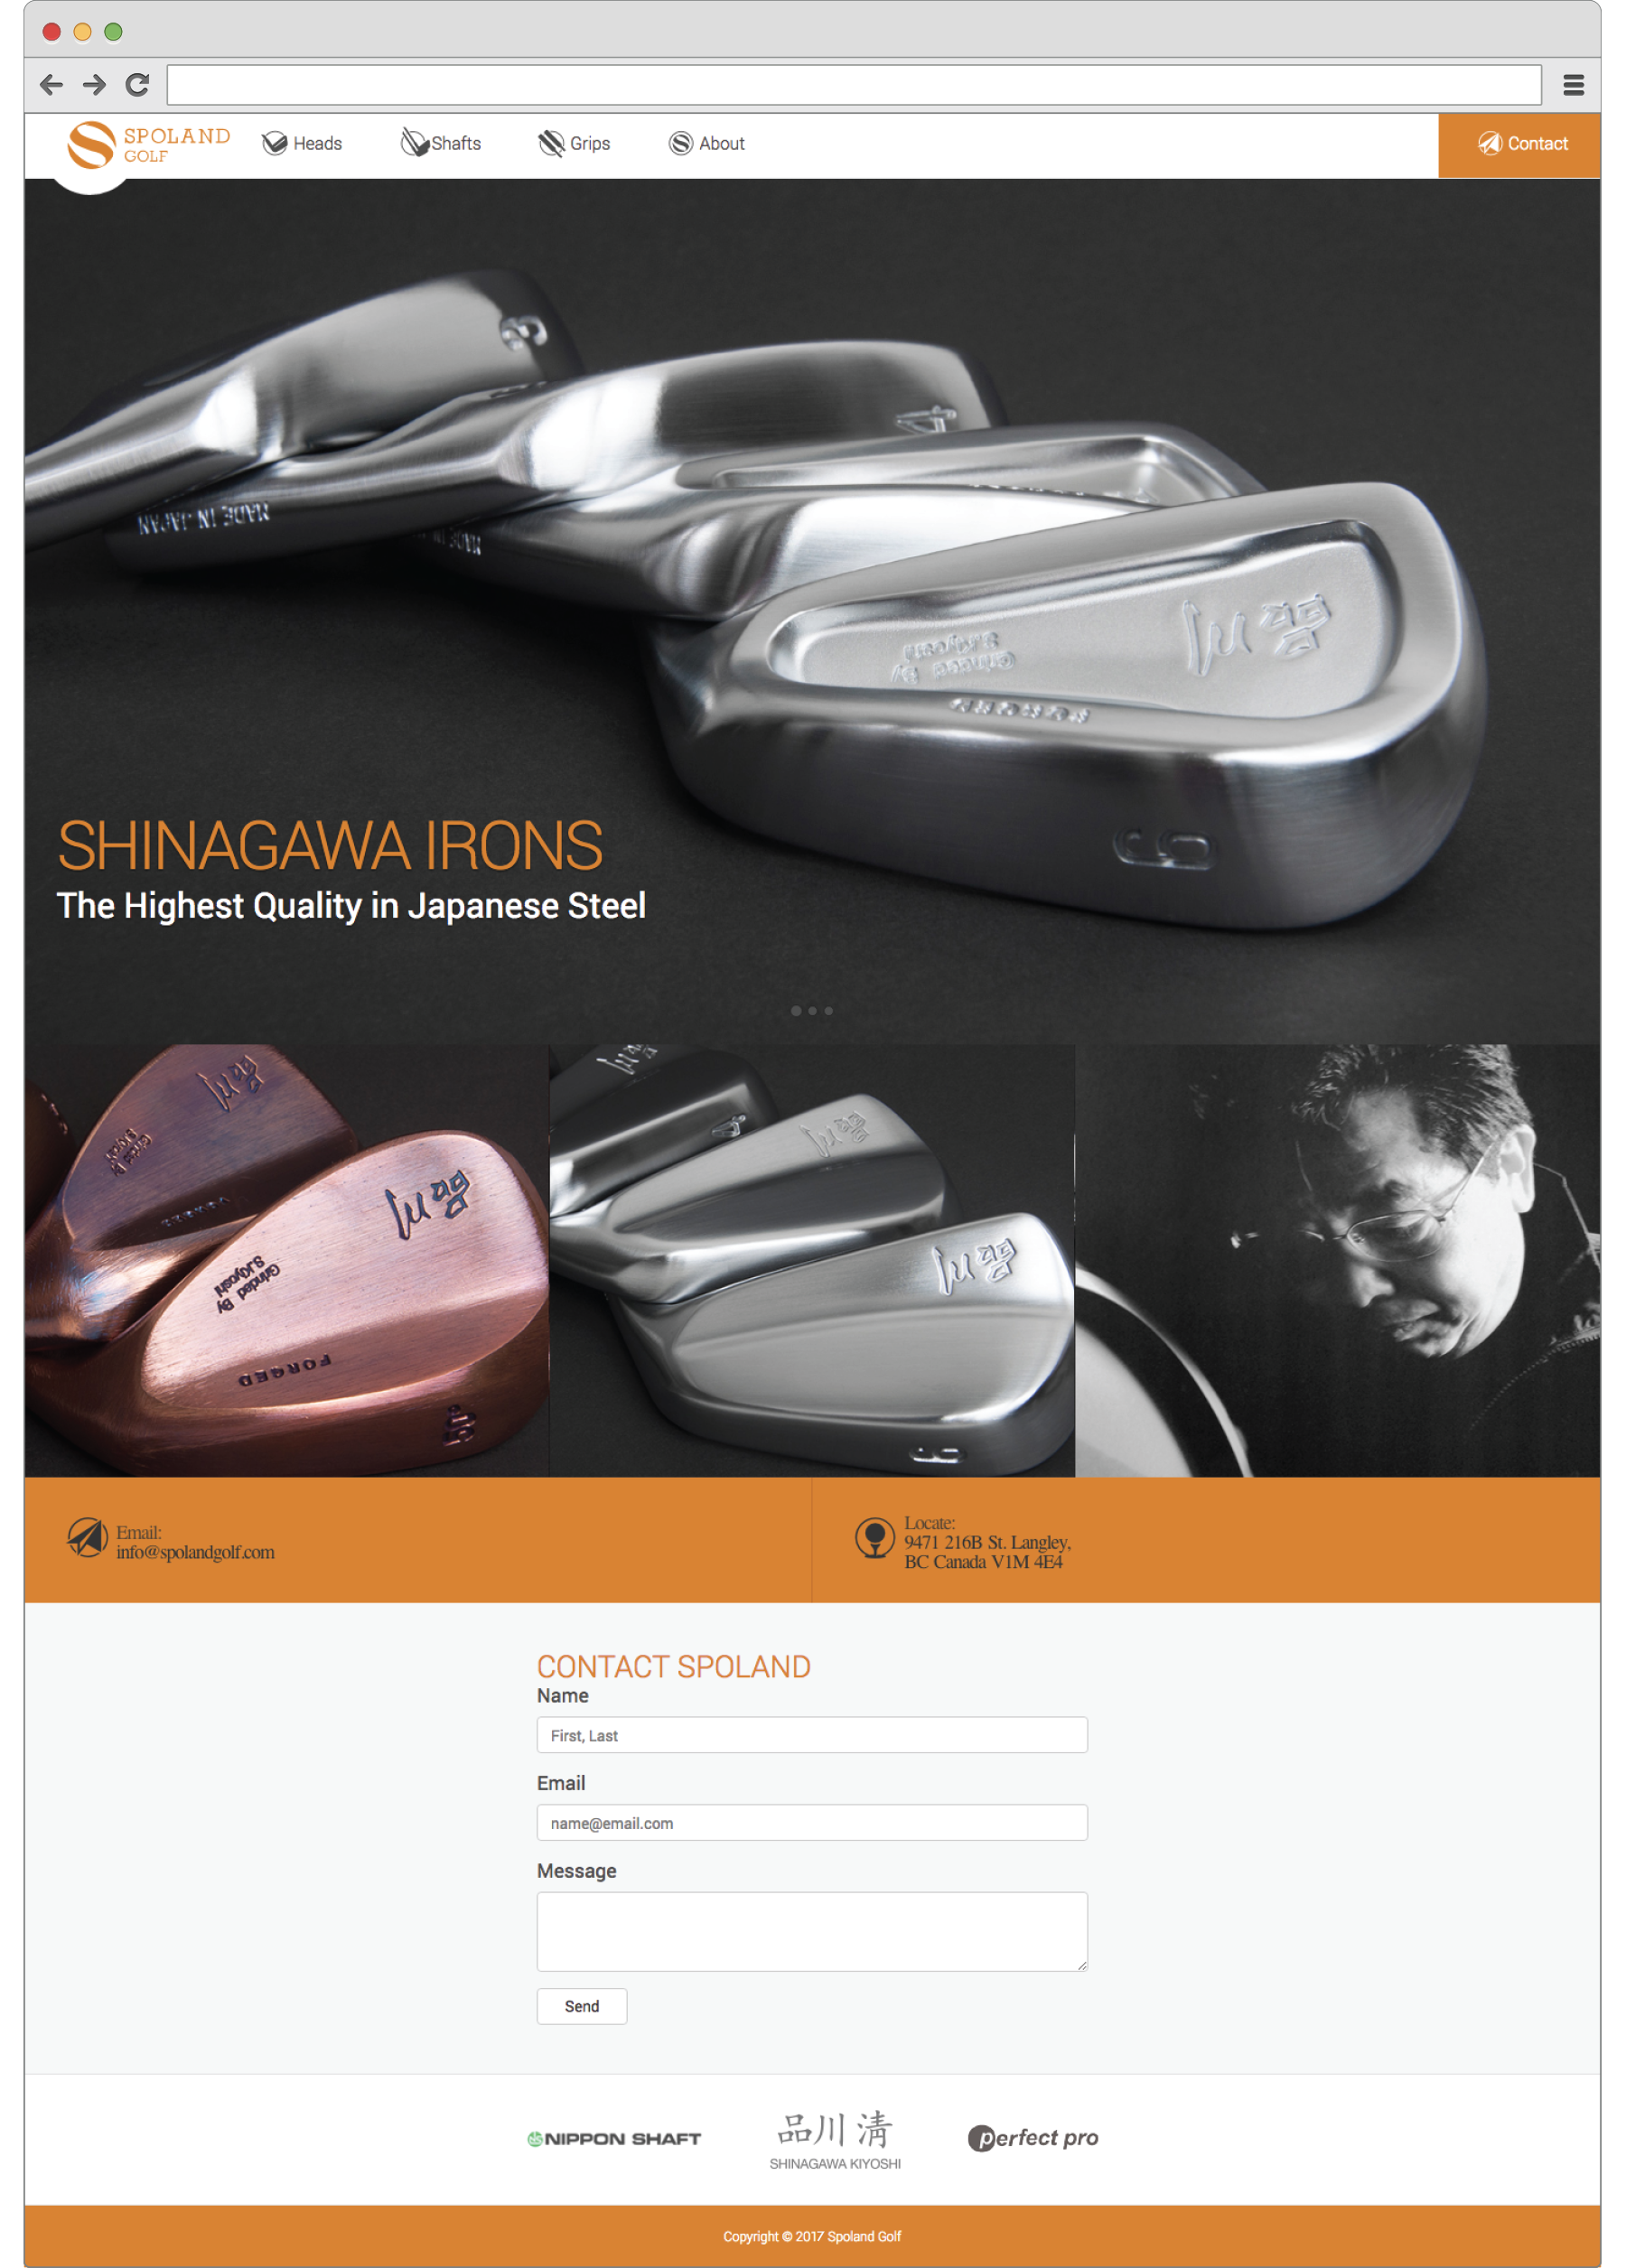 Spoland Golf Website Design